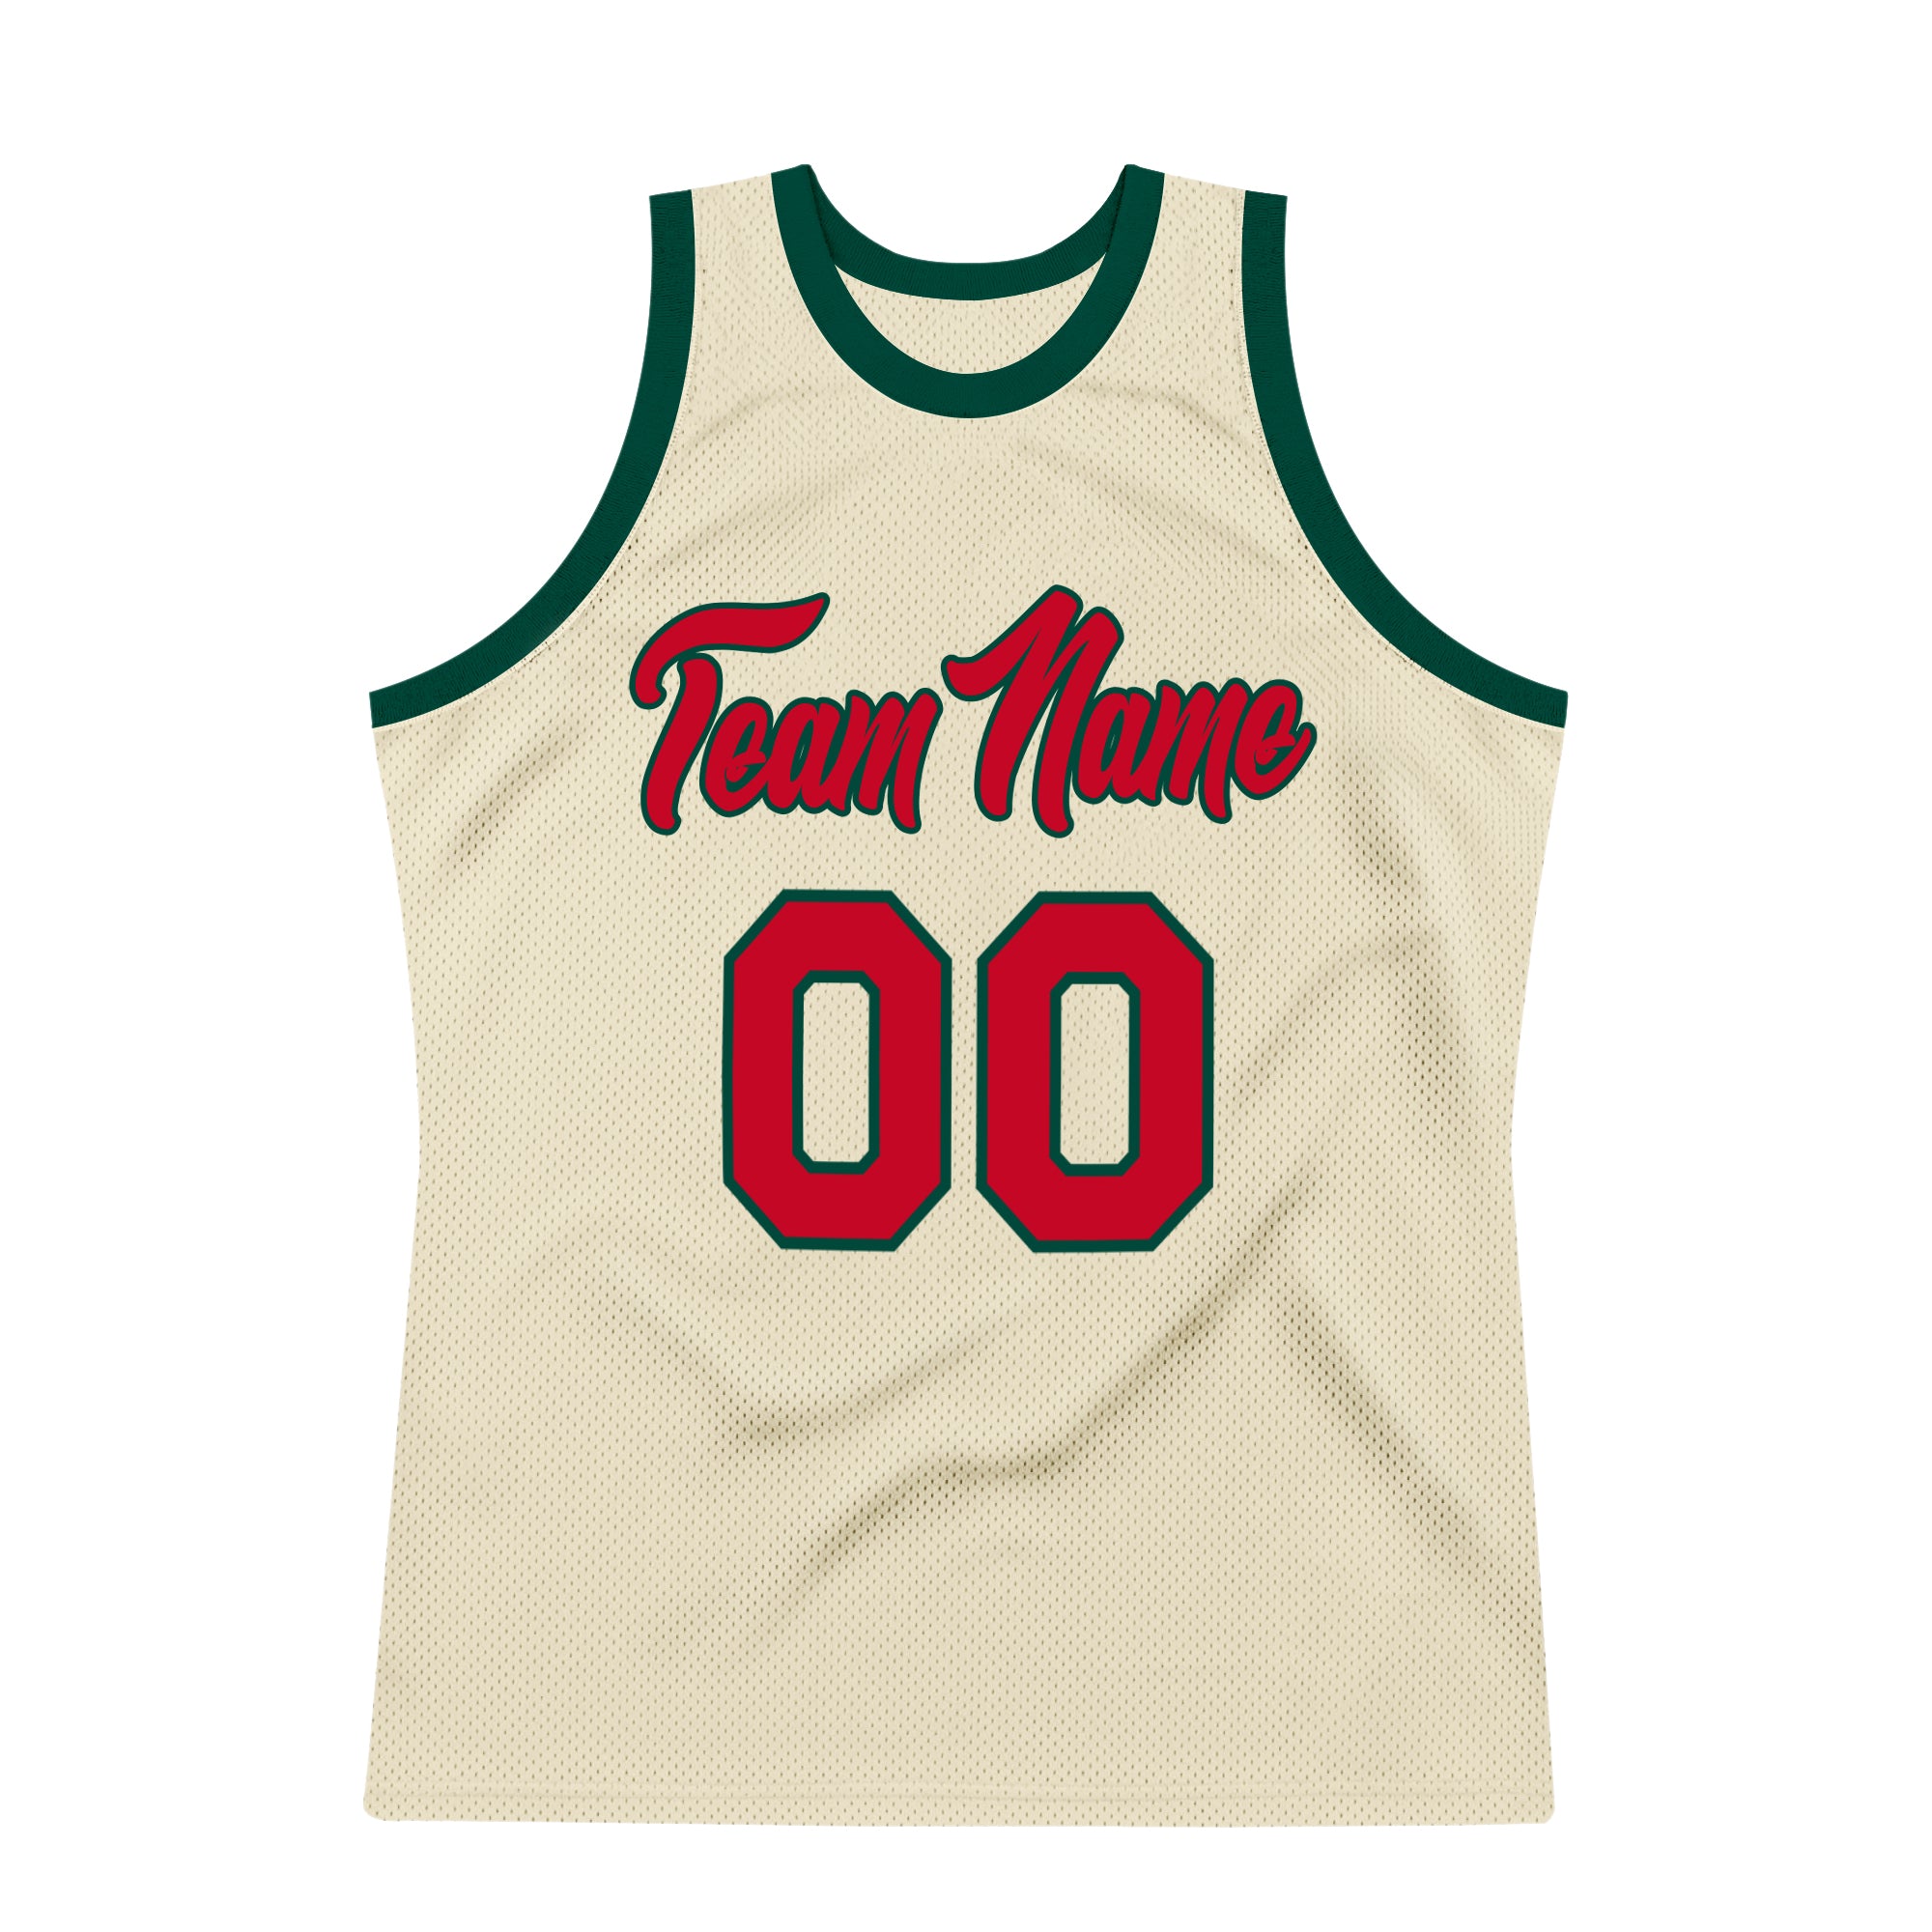 Custom Cream Red-Hunter Green Authentic Throwback Basketball Jersey